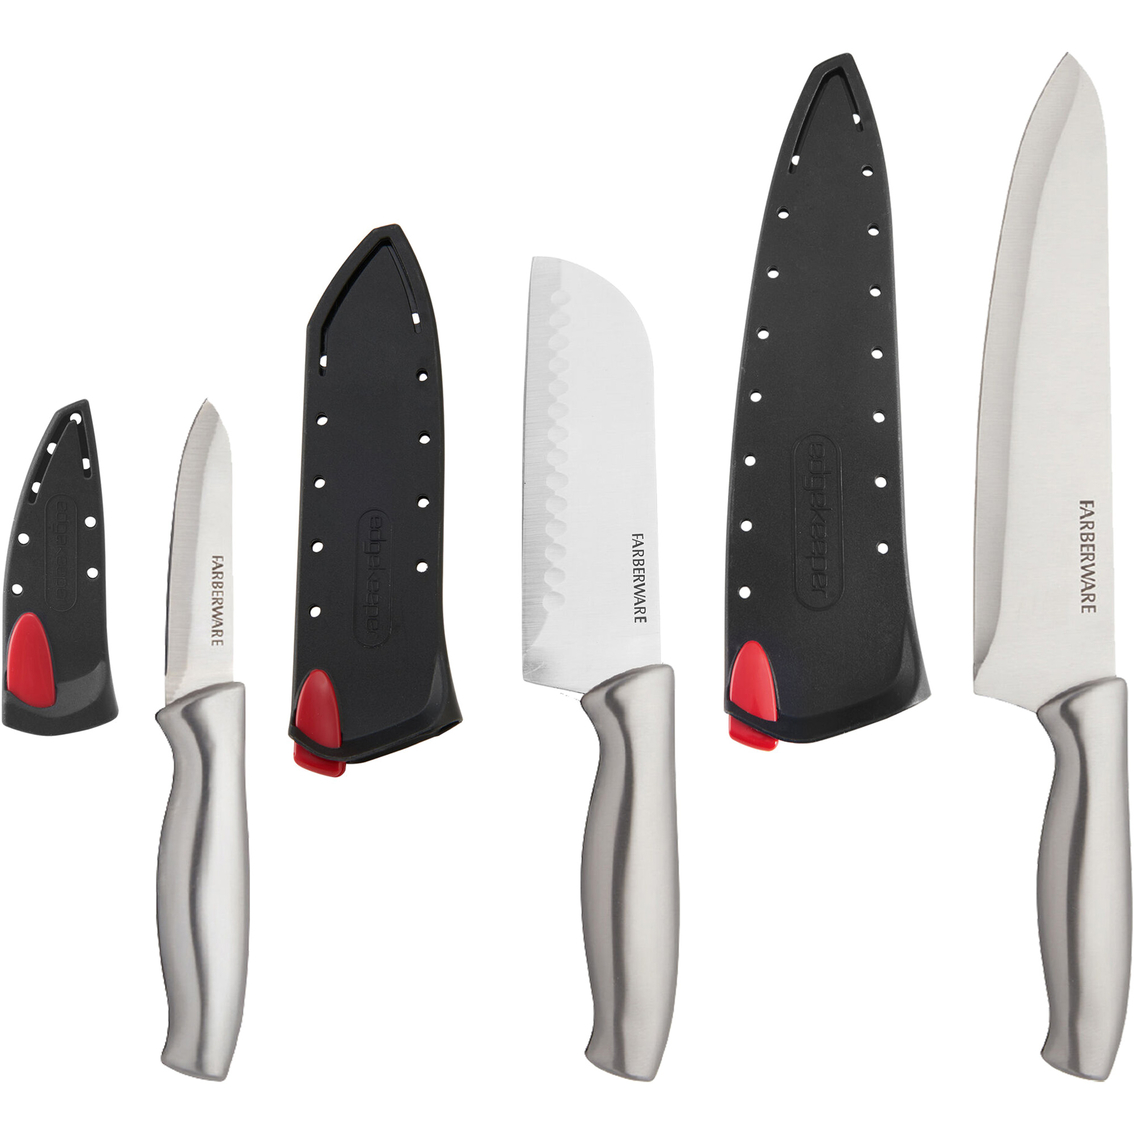 Farberware Chef Knives 6 pc. Set with Edge Keeper Sheaths